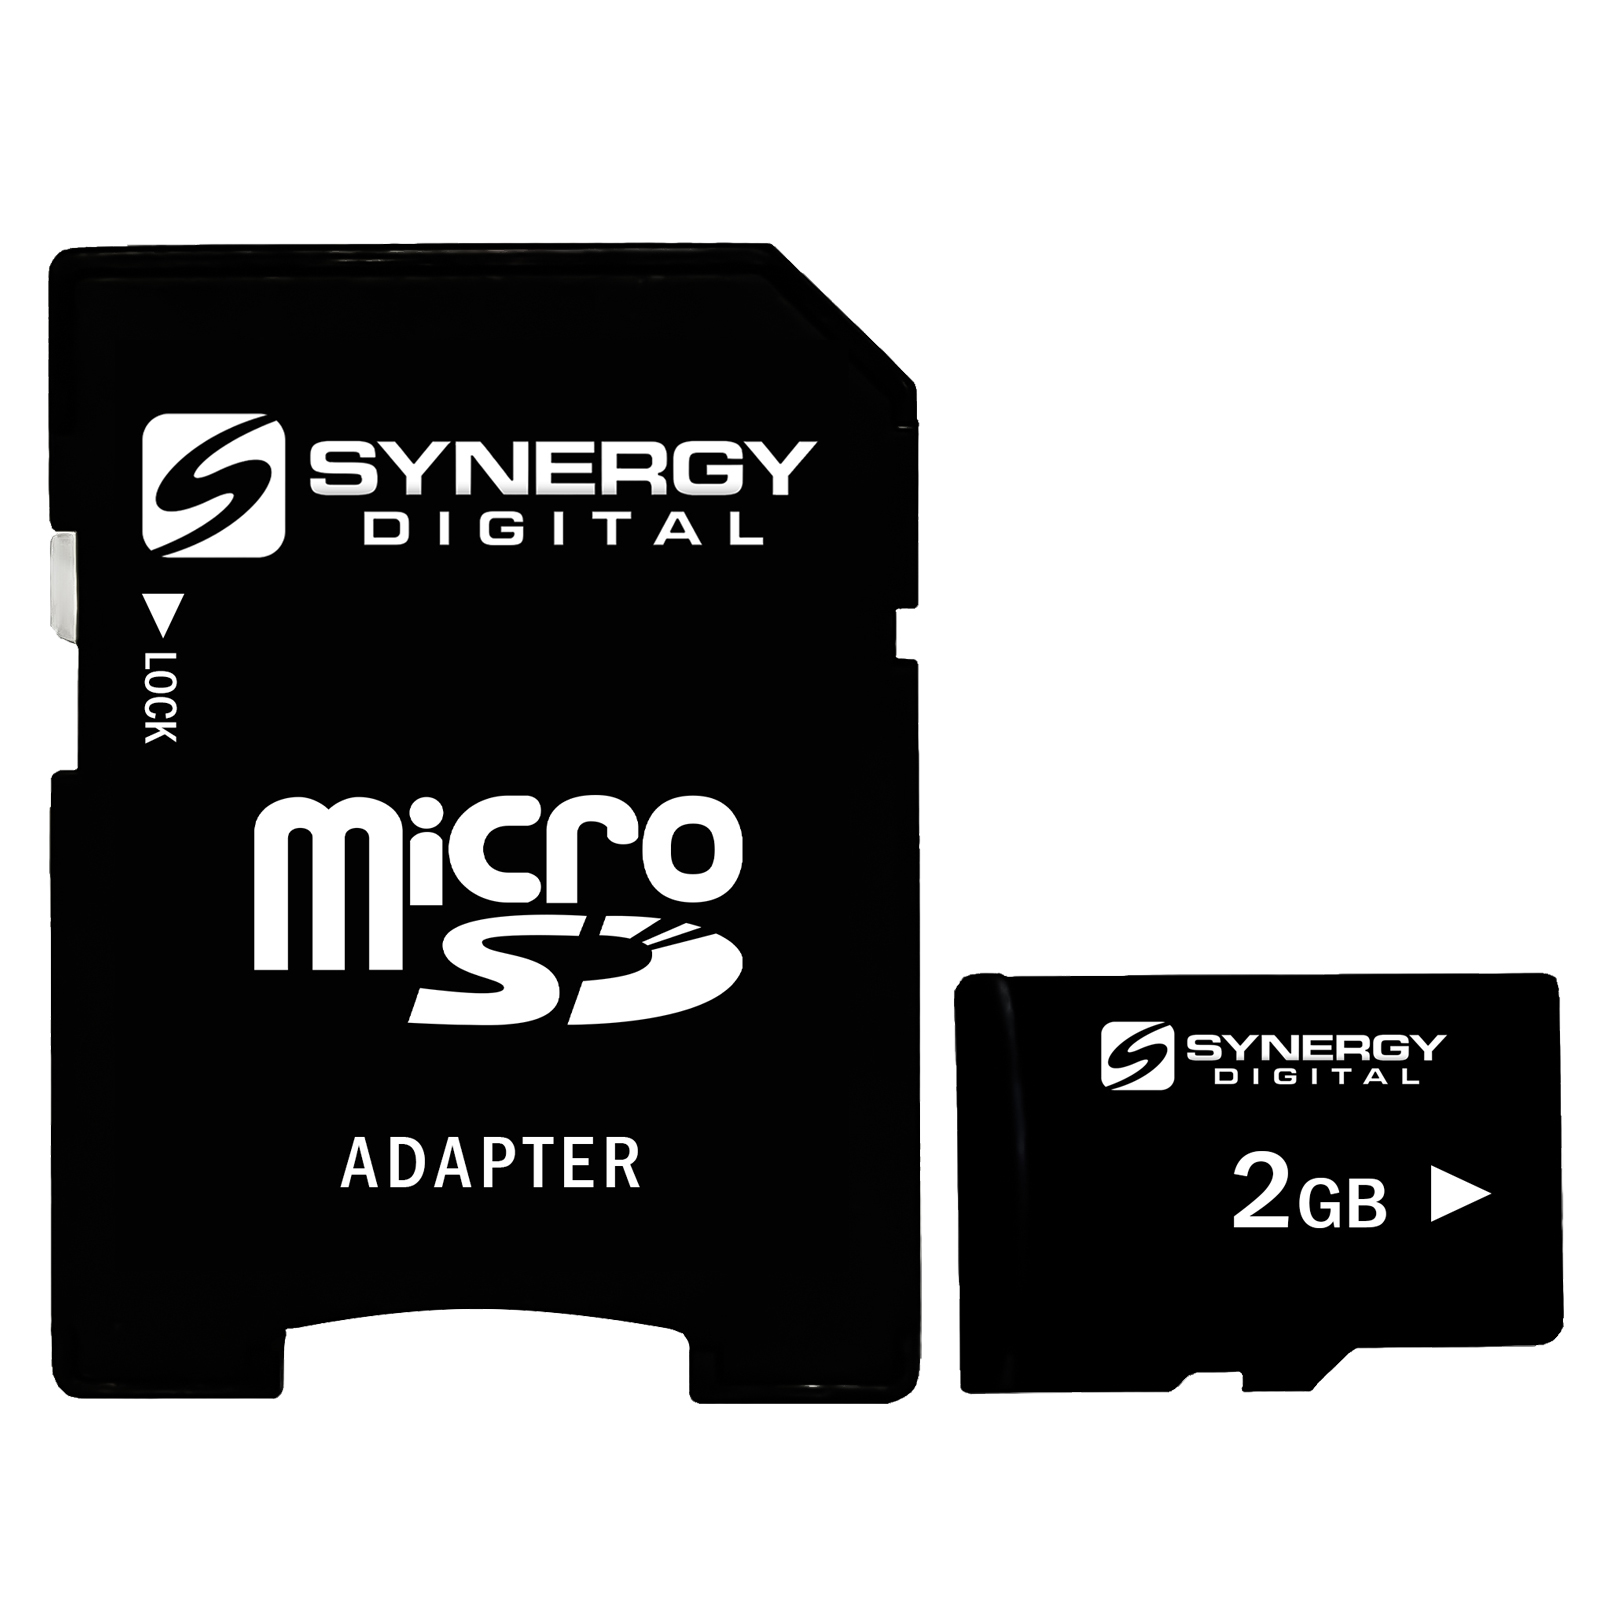 SDC/2GB | 2GB microSD Memory Card